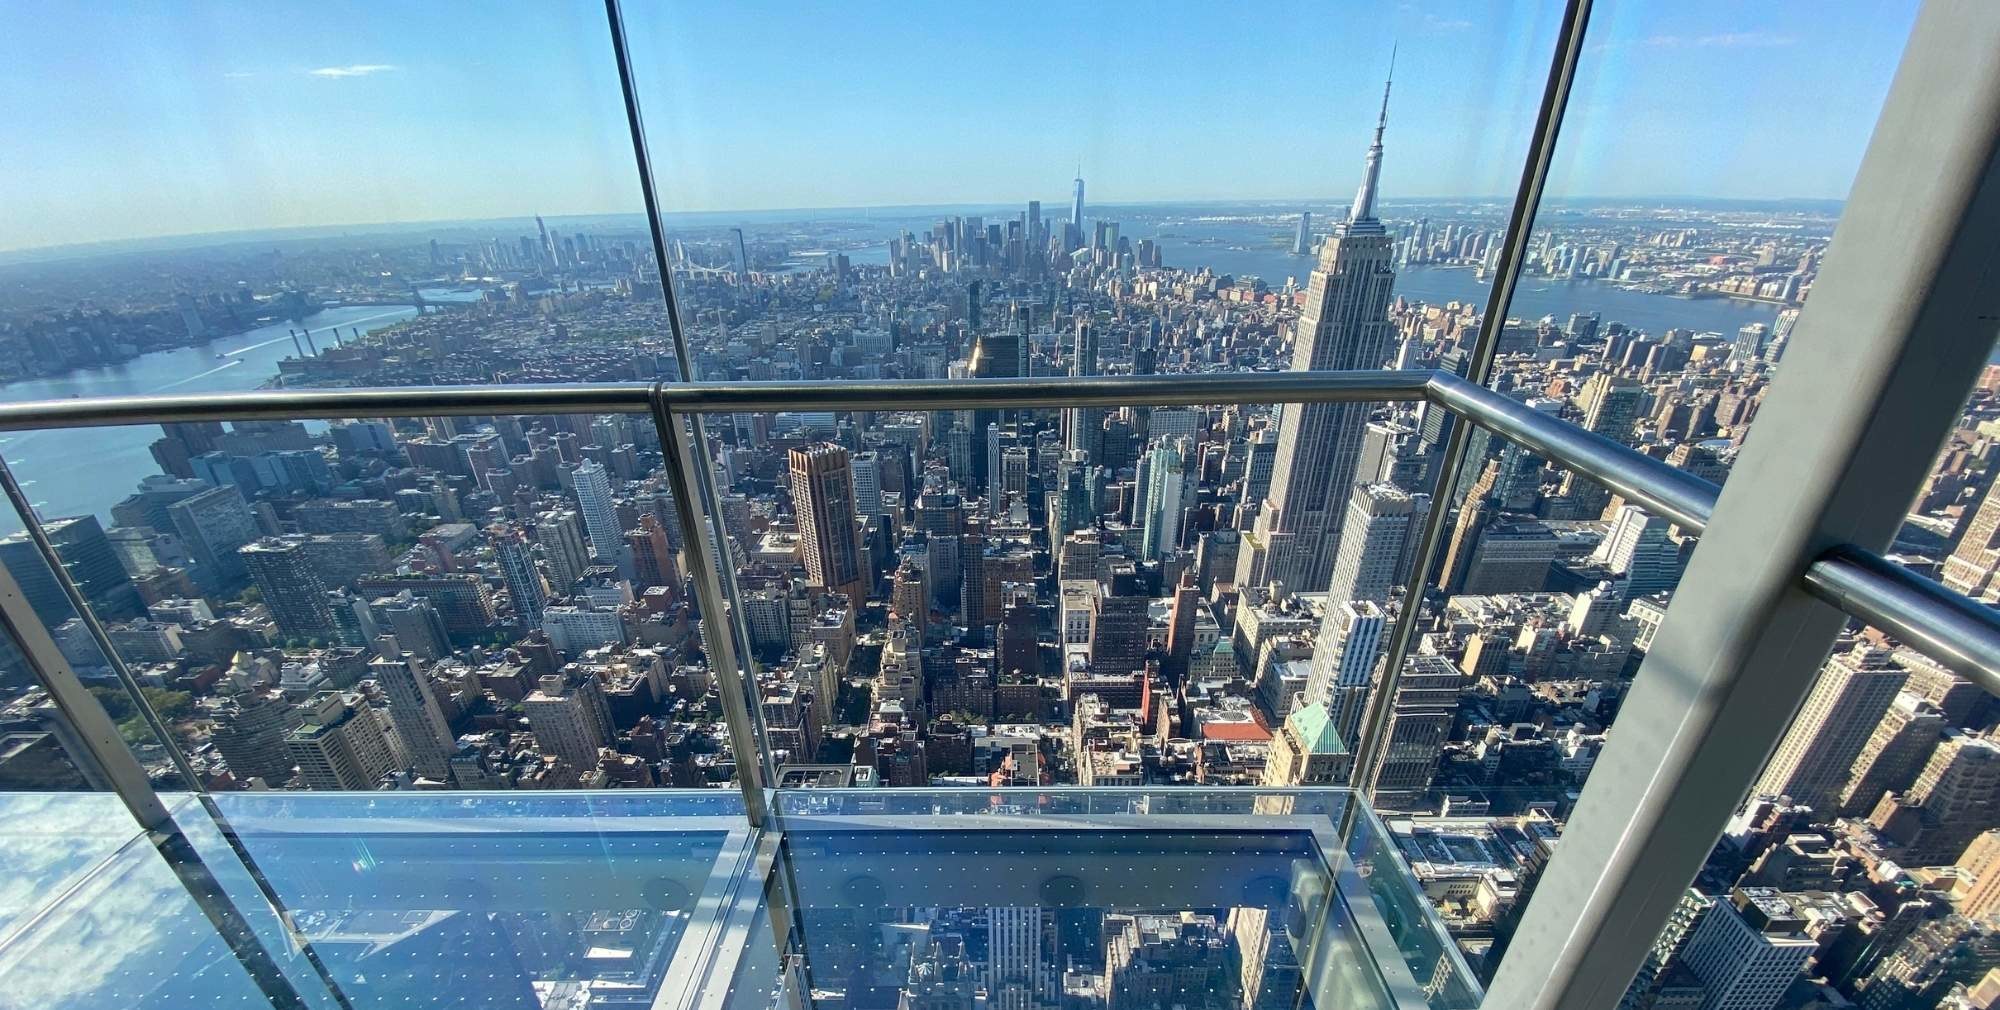 New York City Skyline seen through a glass elevator